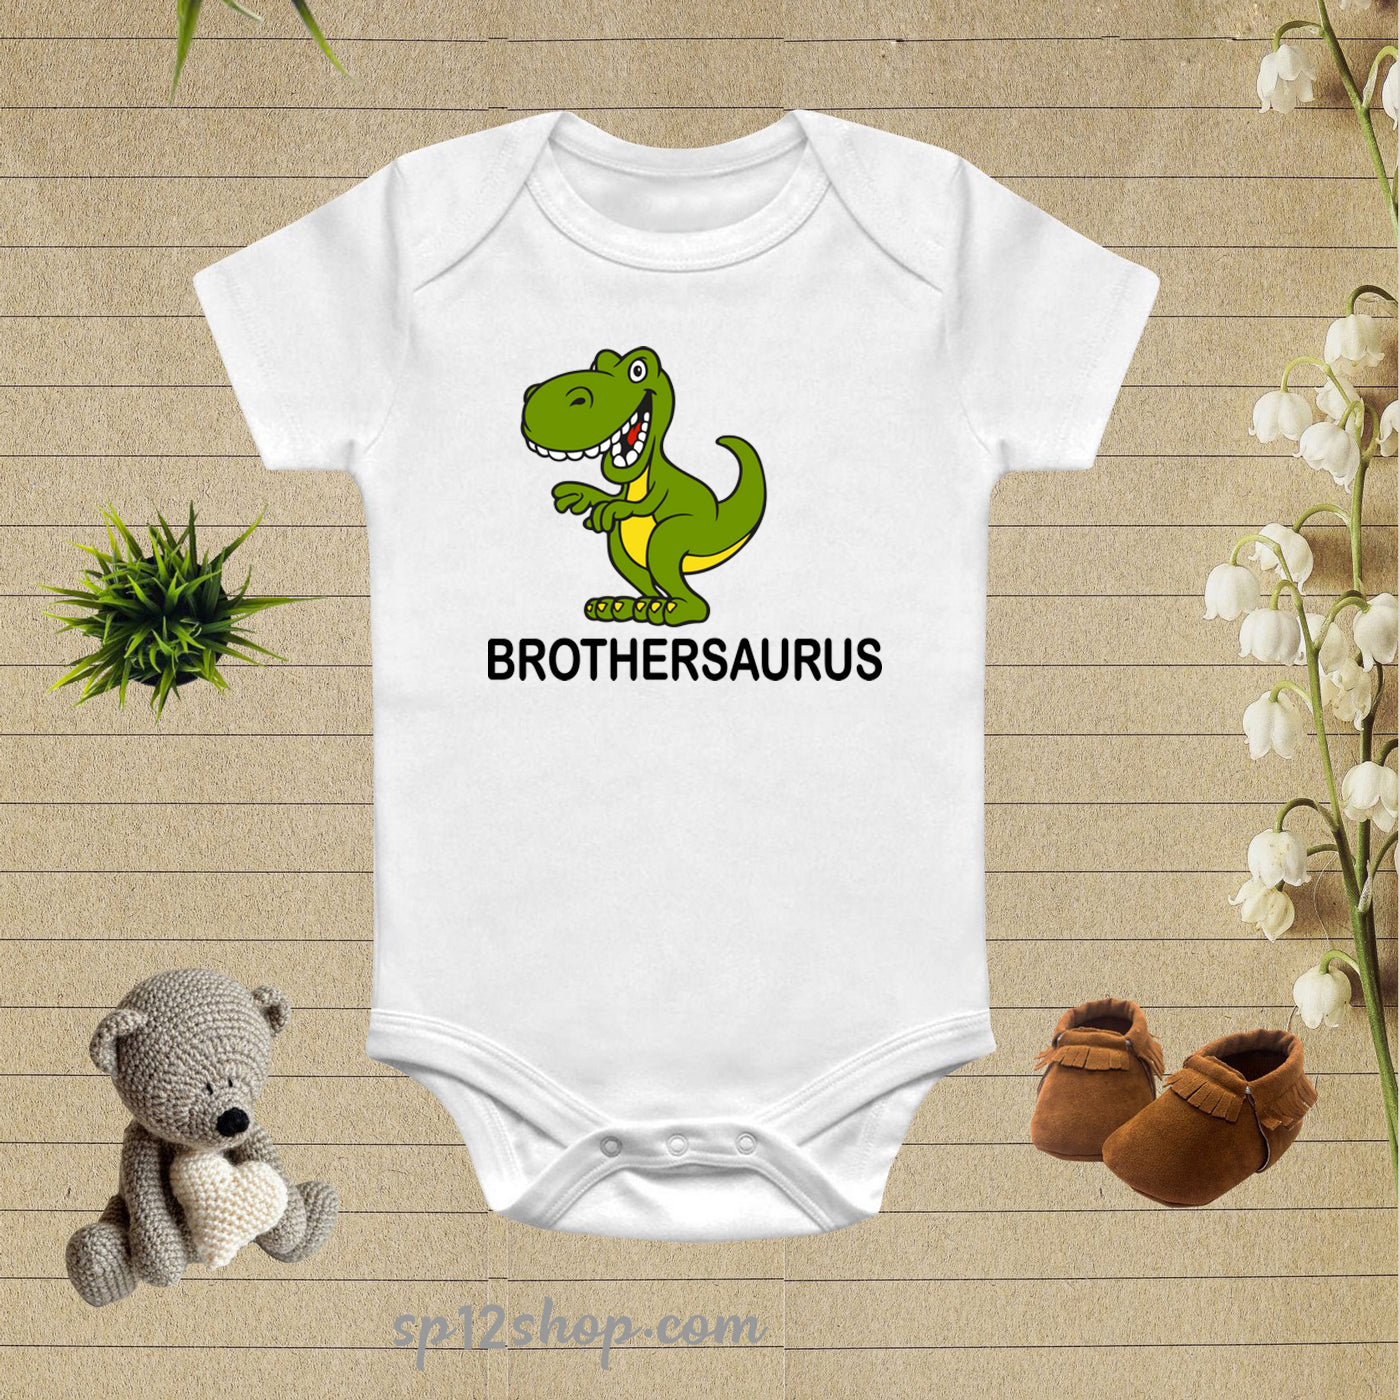 Brothersaurus Funny Baby Bodysuit Onesie